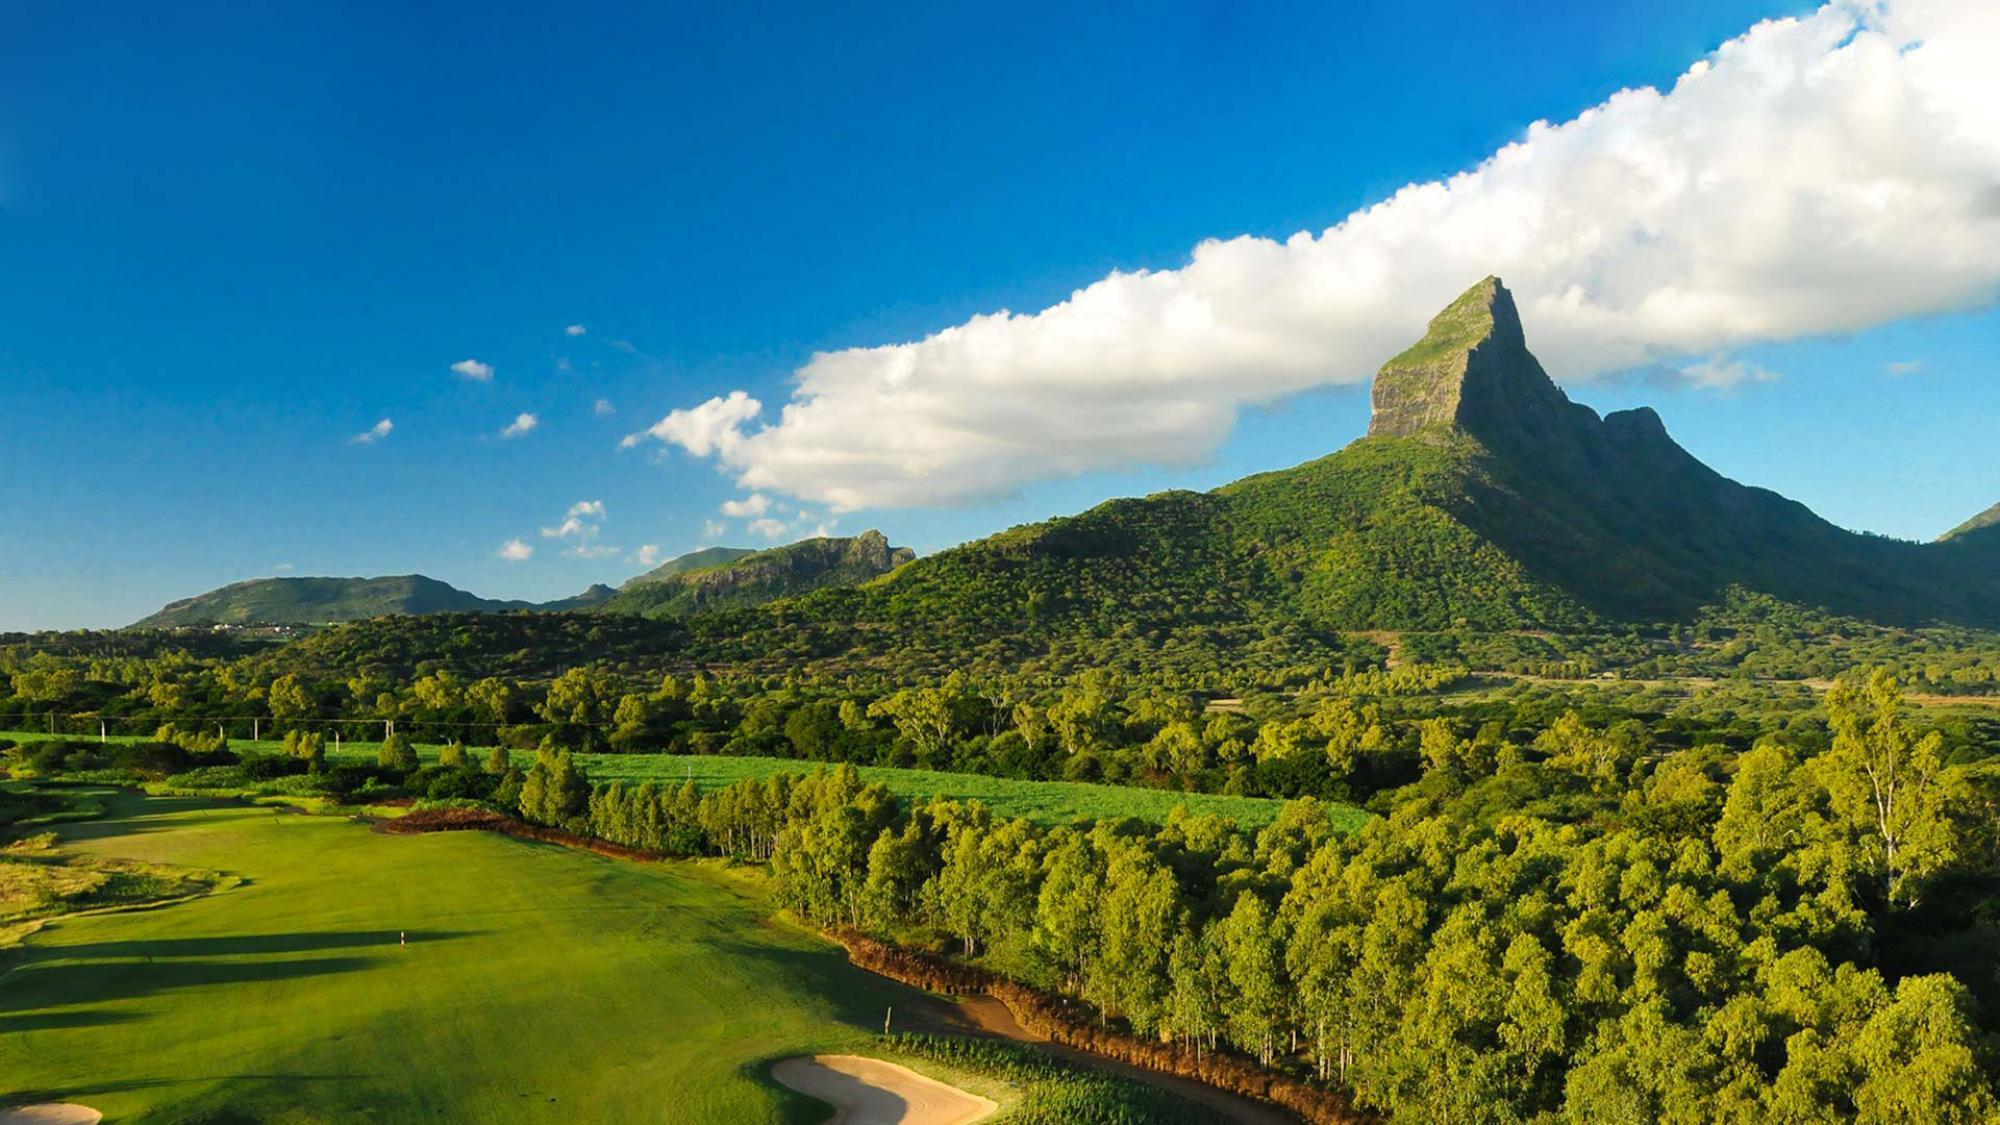 View Tamarina Golf Club's impressive golf course situated in dazzling Mauritius.